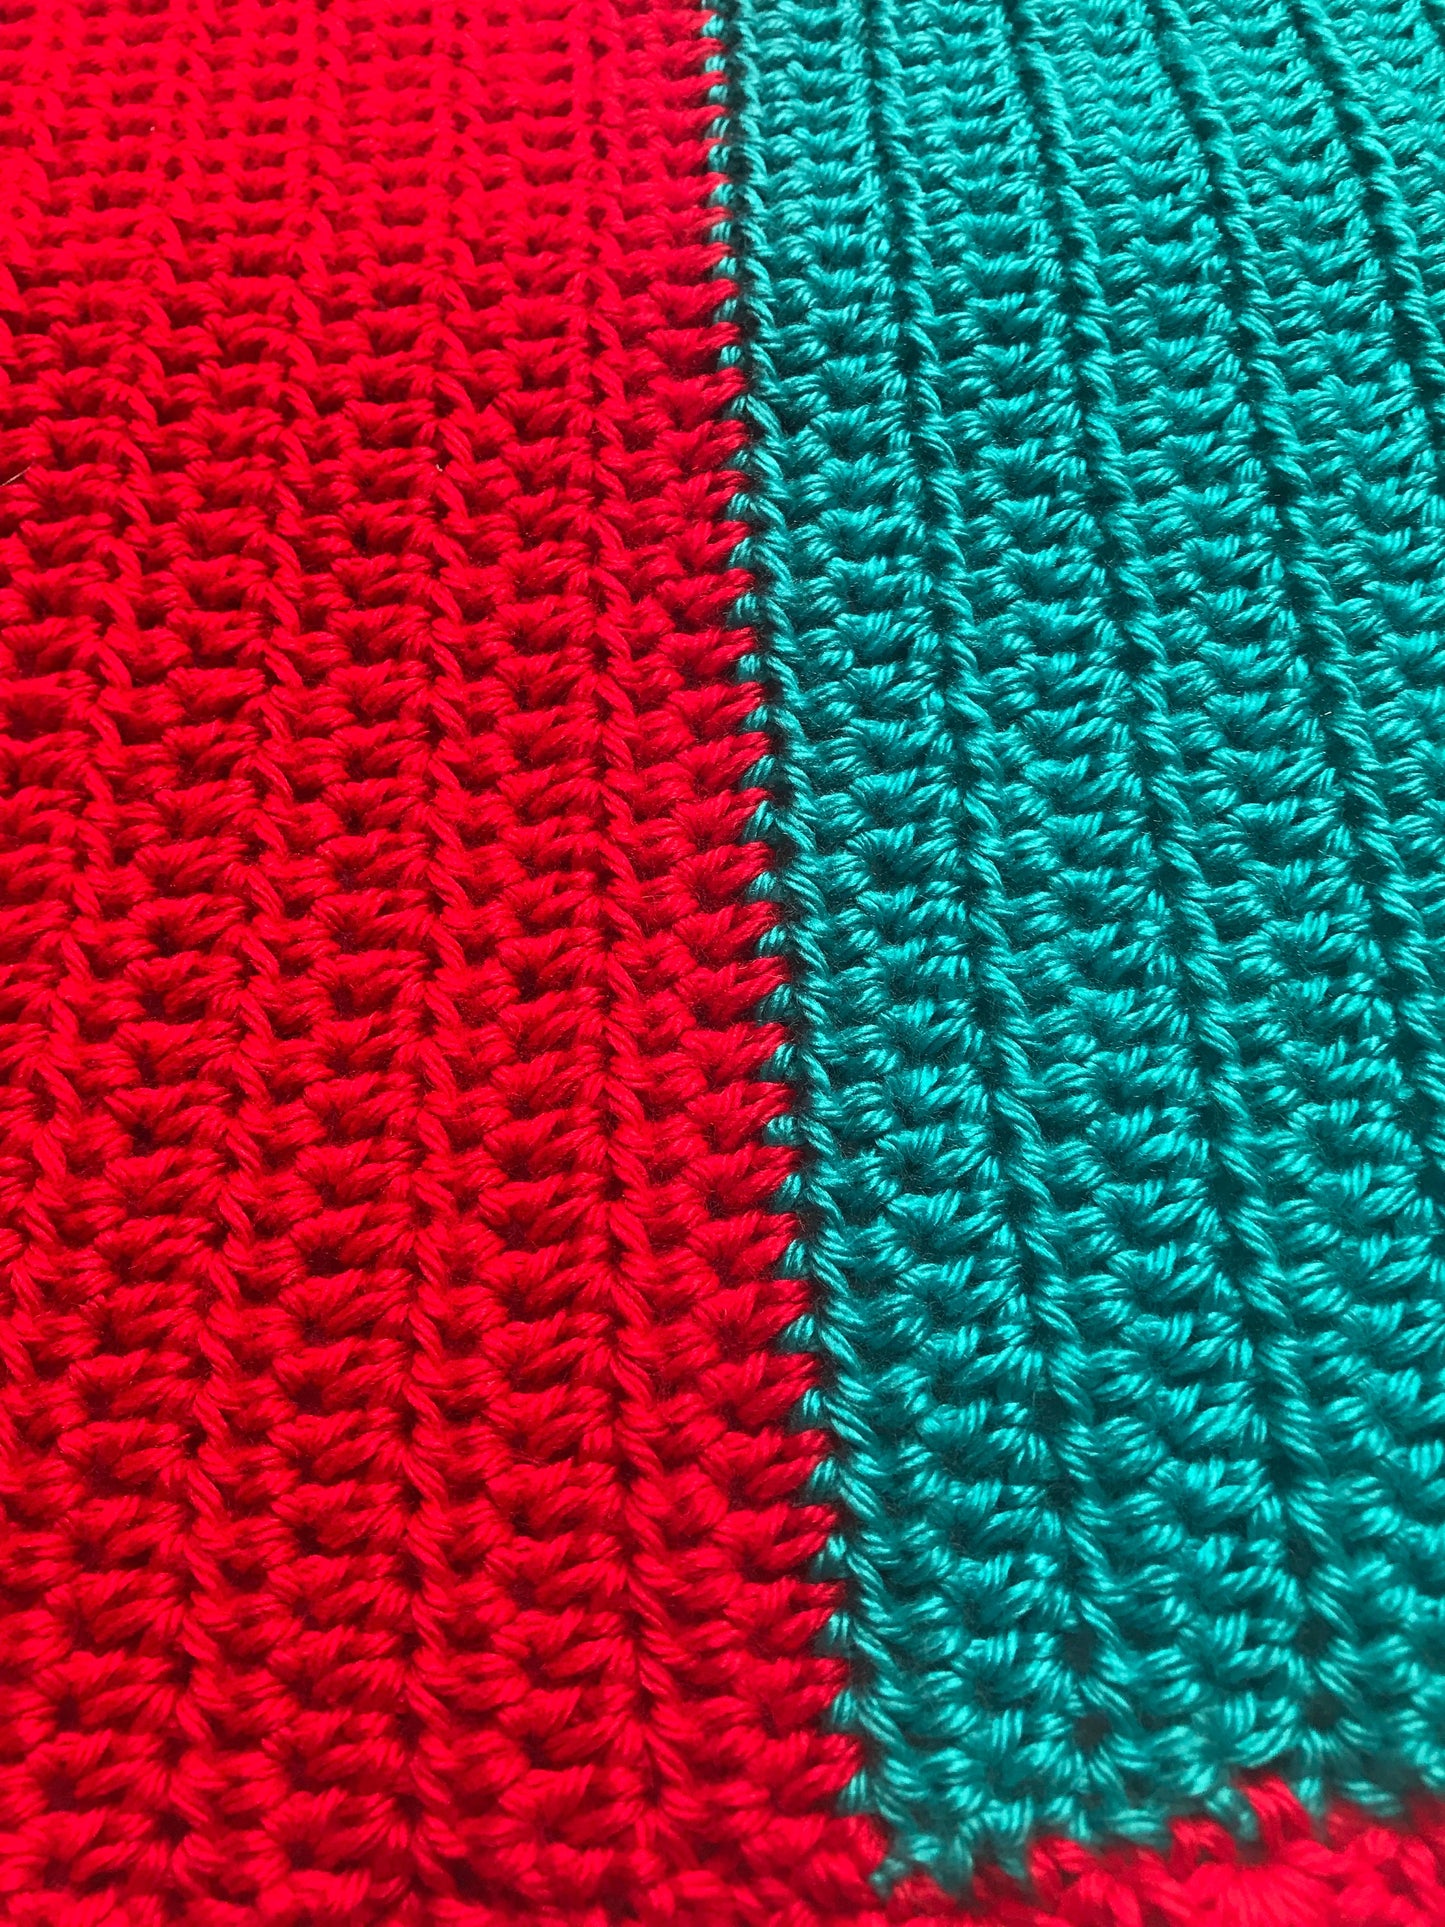 Bobbles and Shells Crochet Throw Blanket